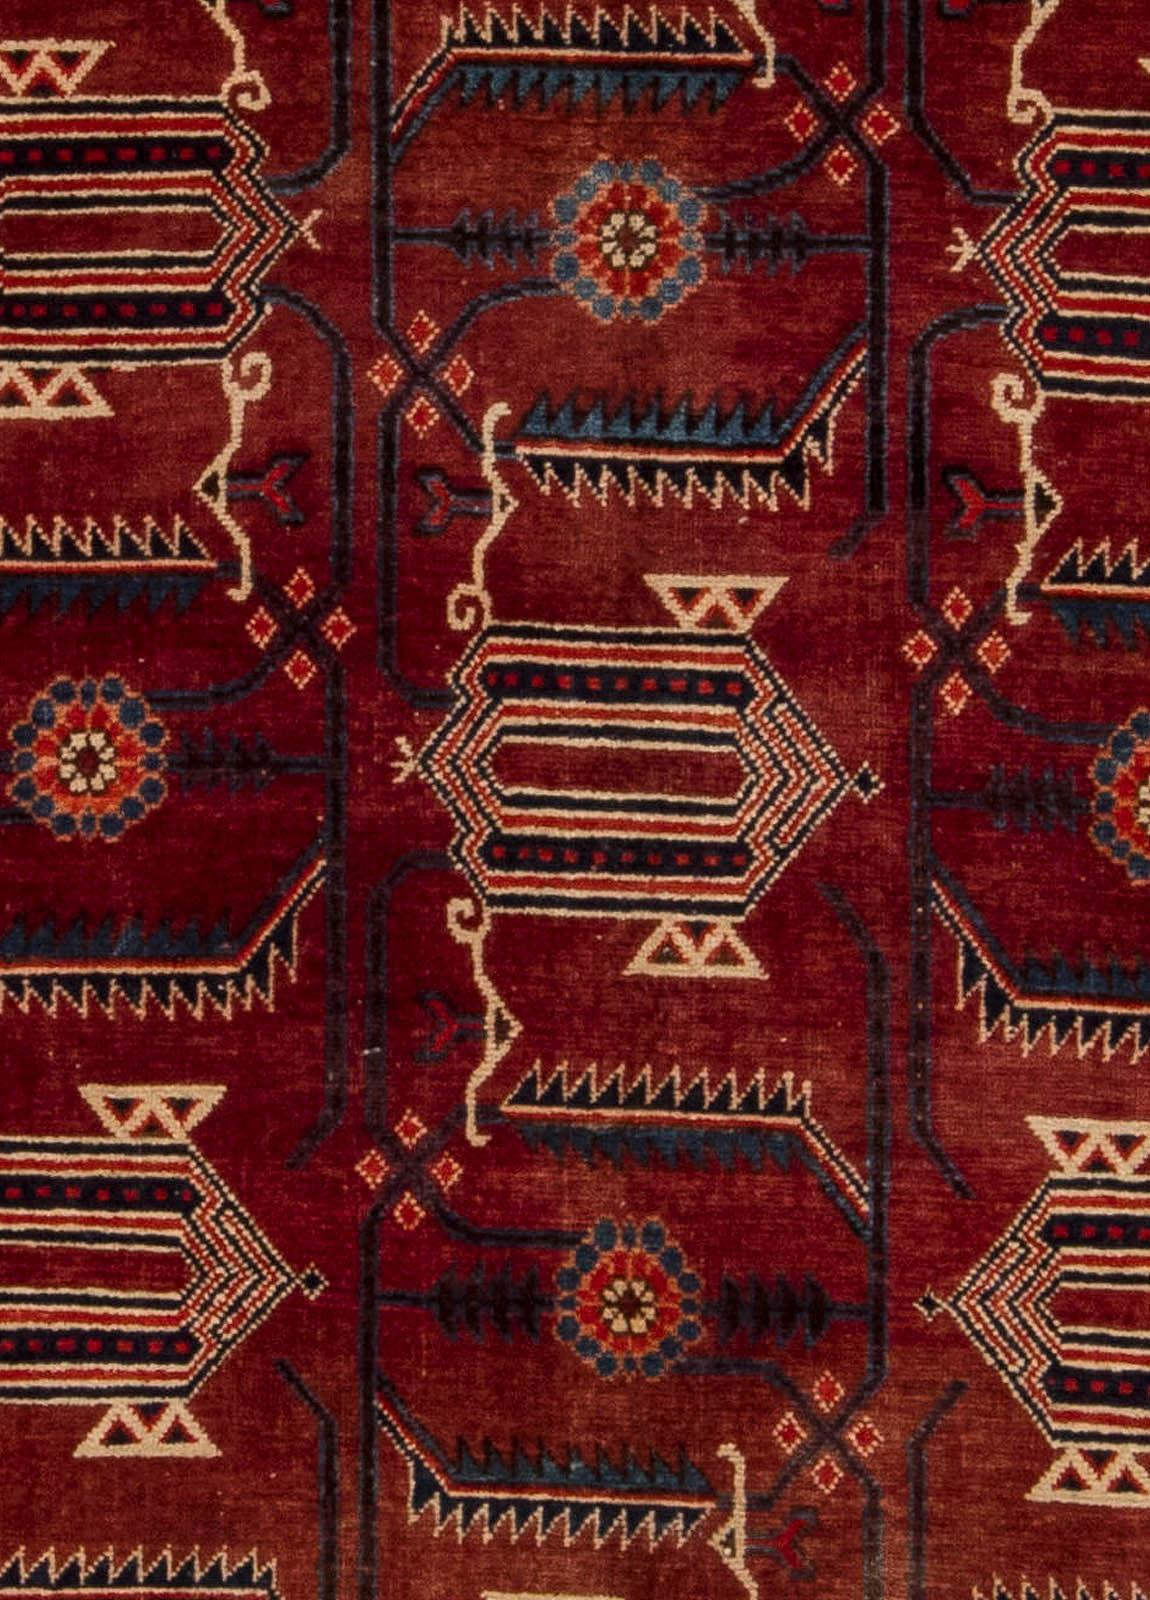 Midcentury Samarkand red handmade wool rug
Size: 7'0